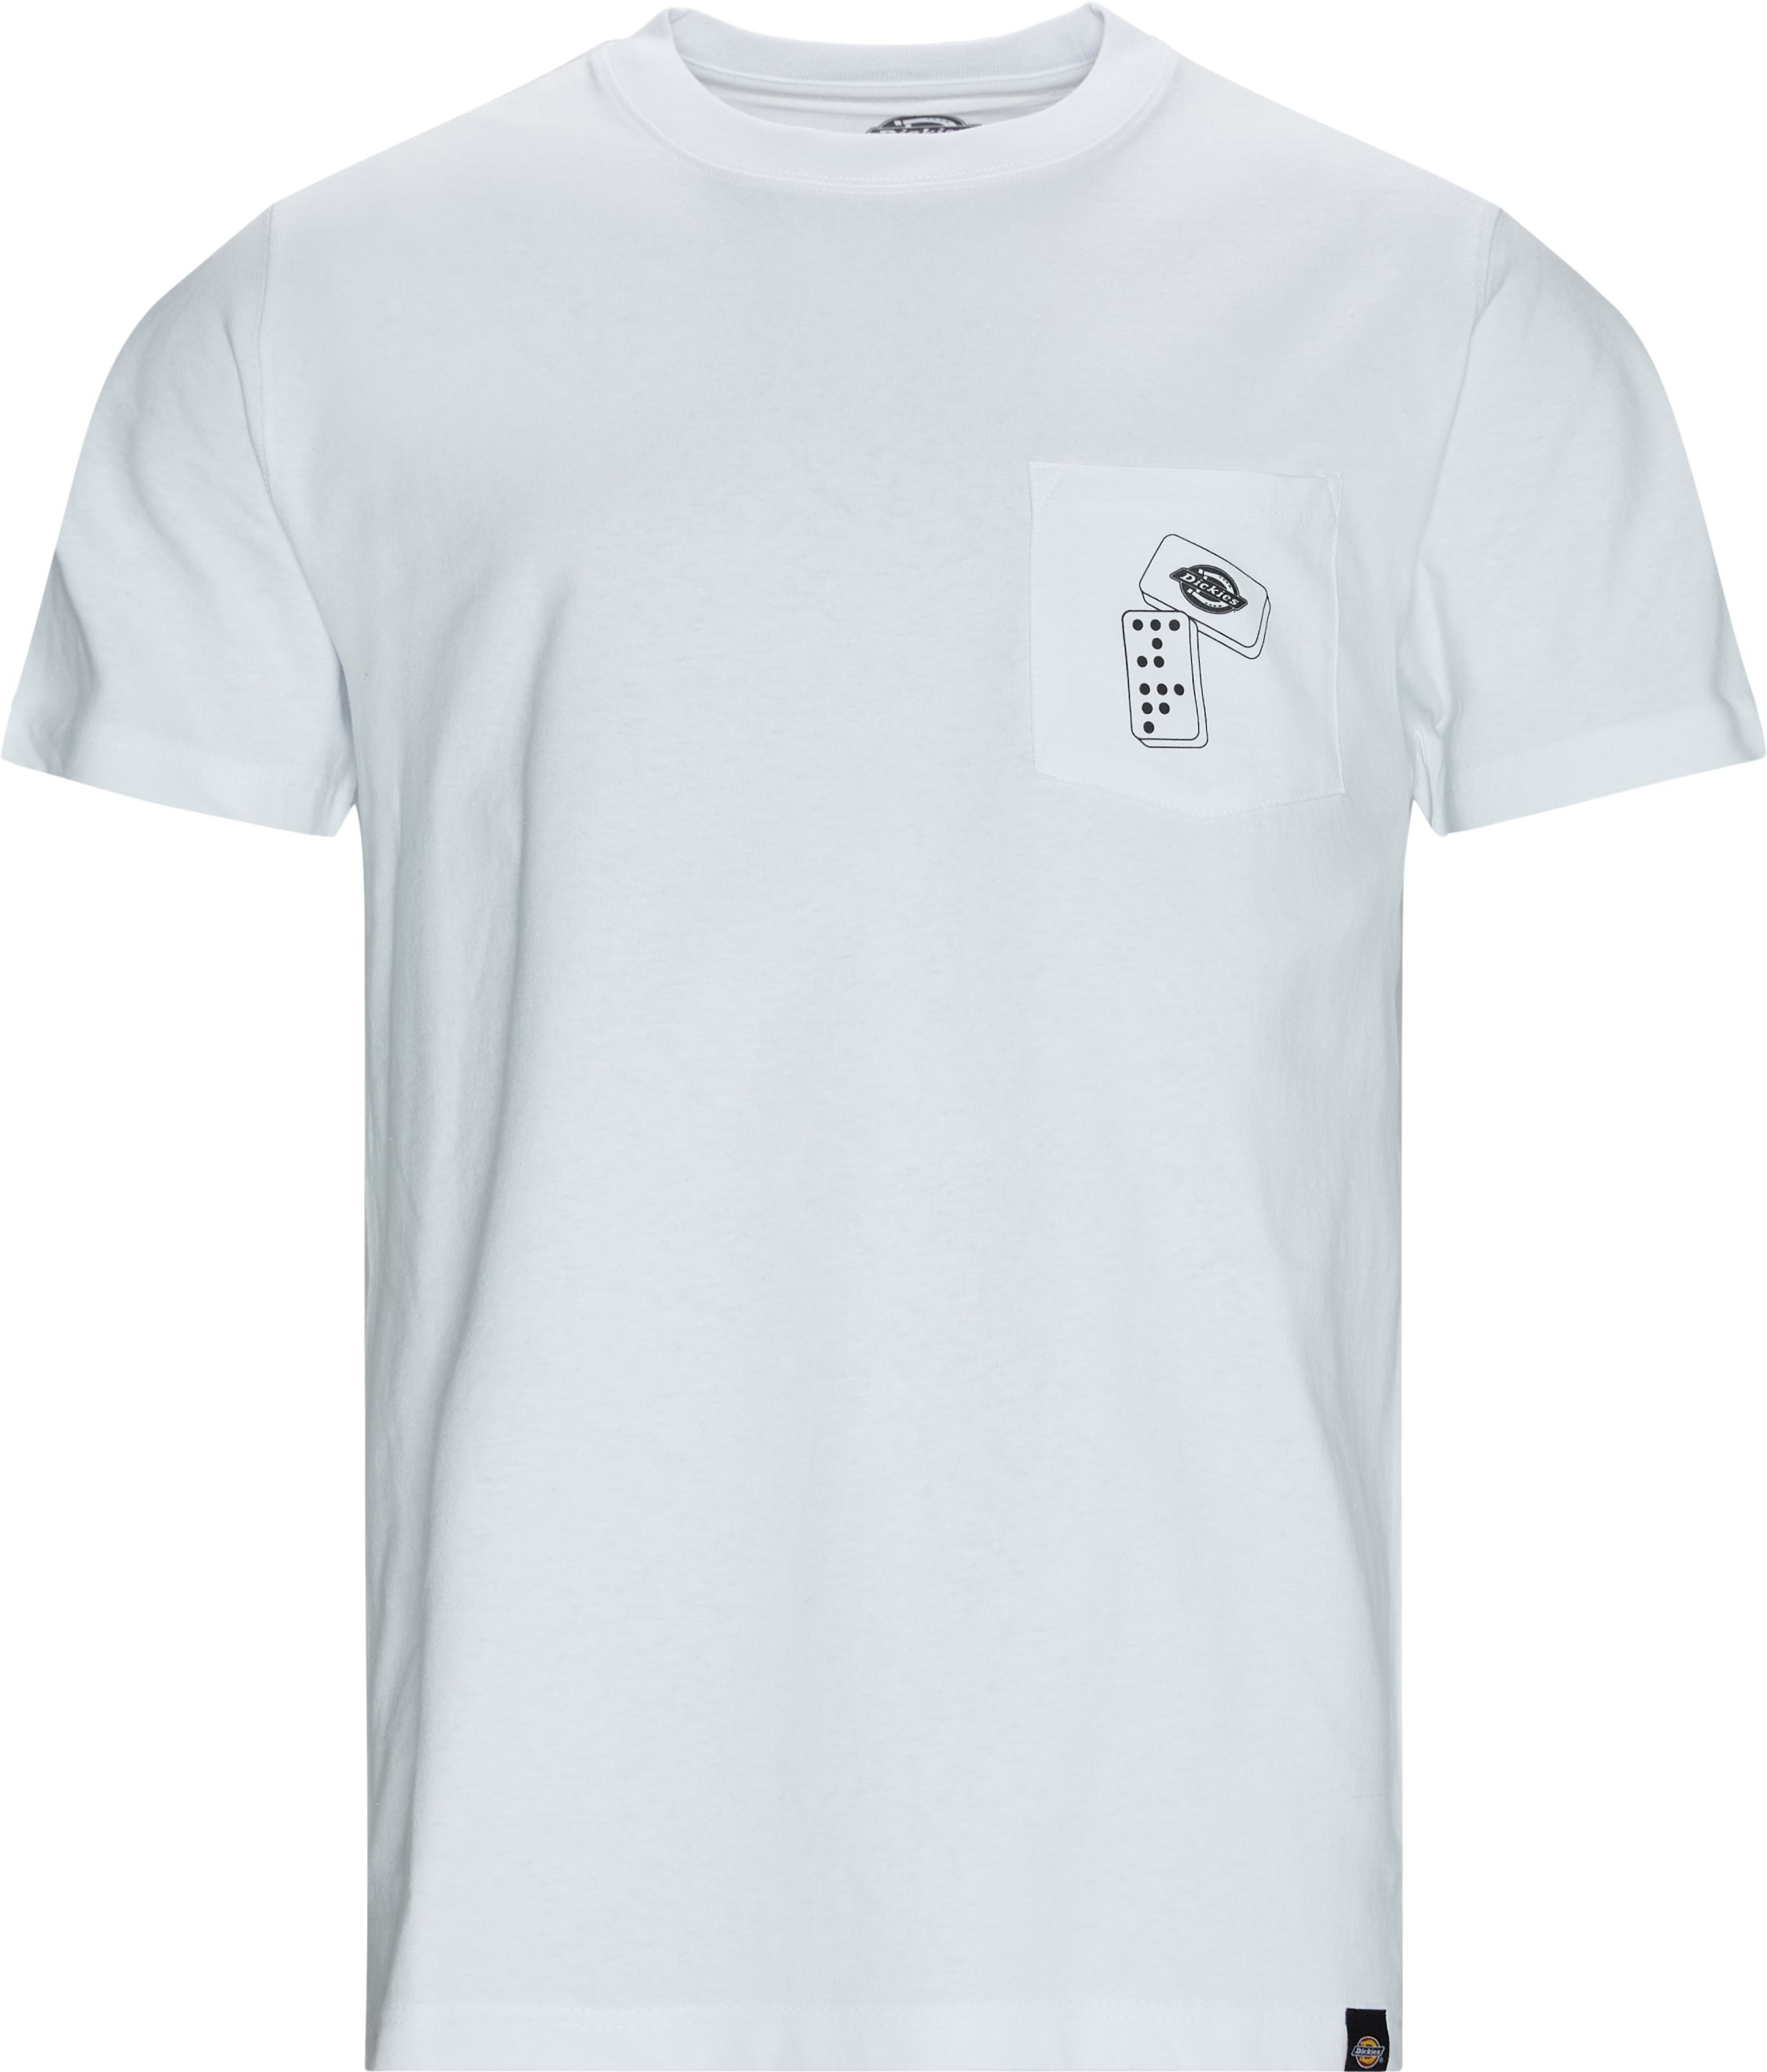 Jf Graphic Tee - T-shirts - Regular fit - Hvid